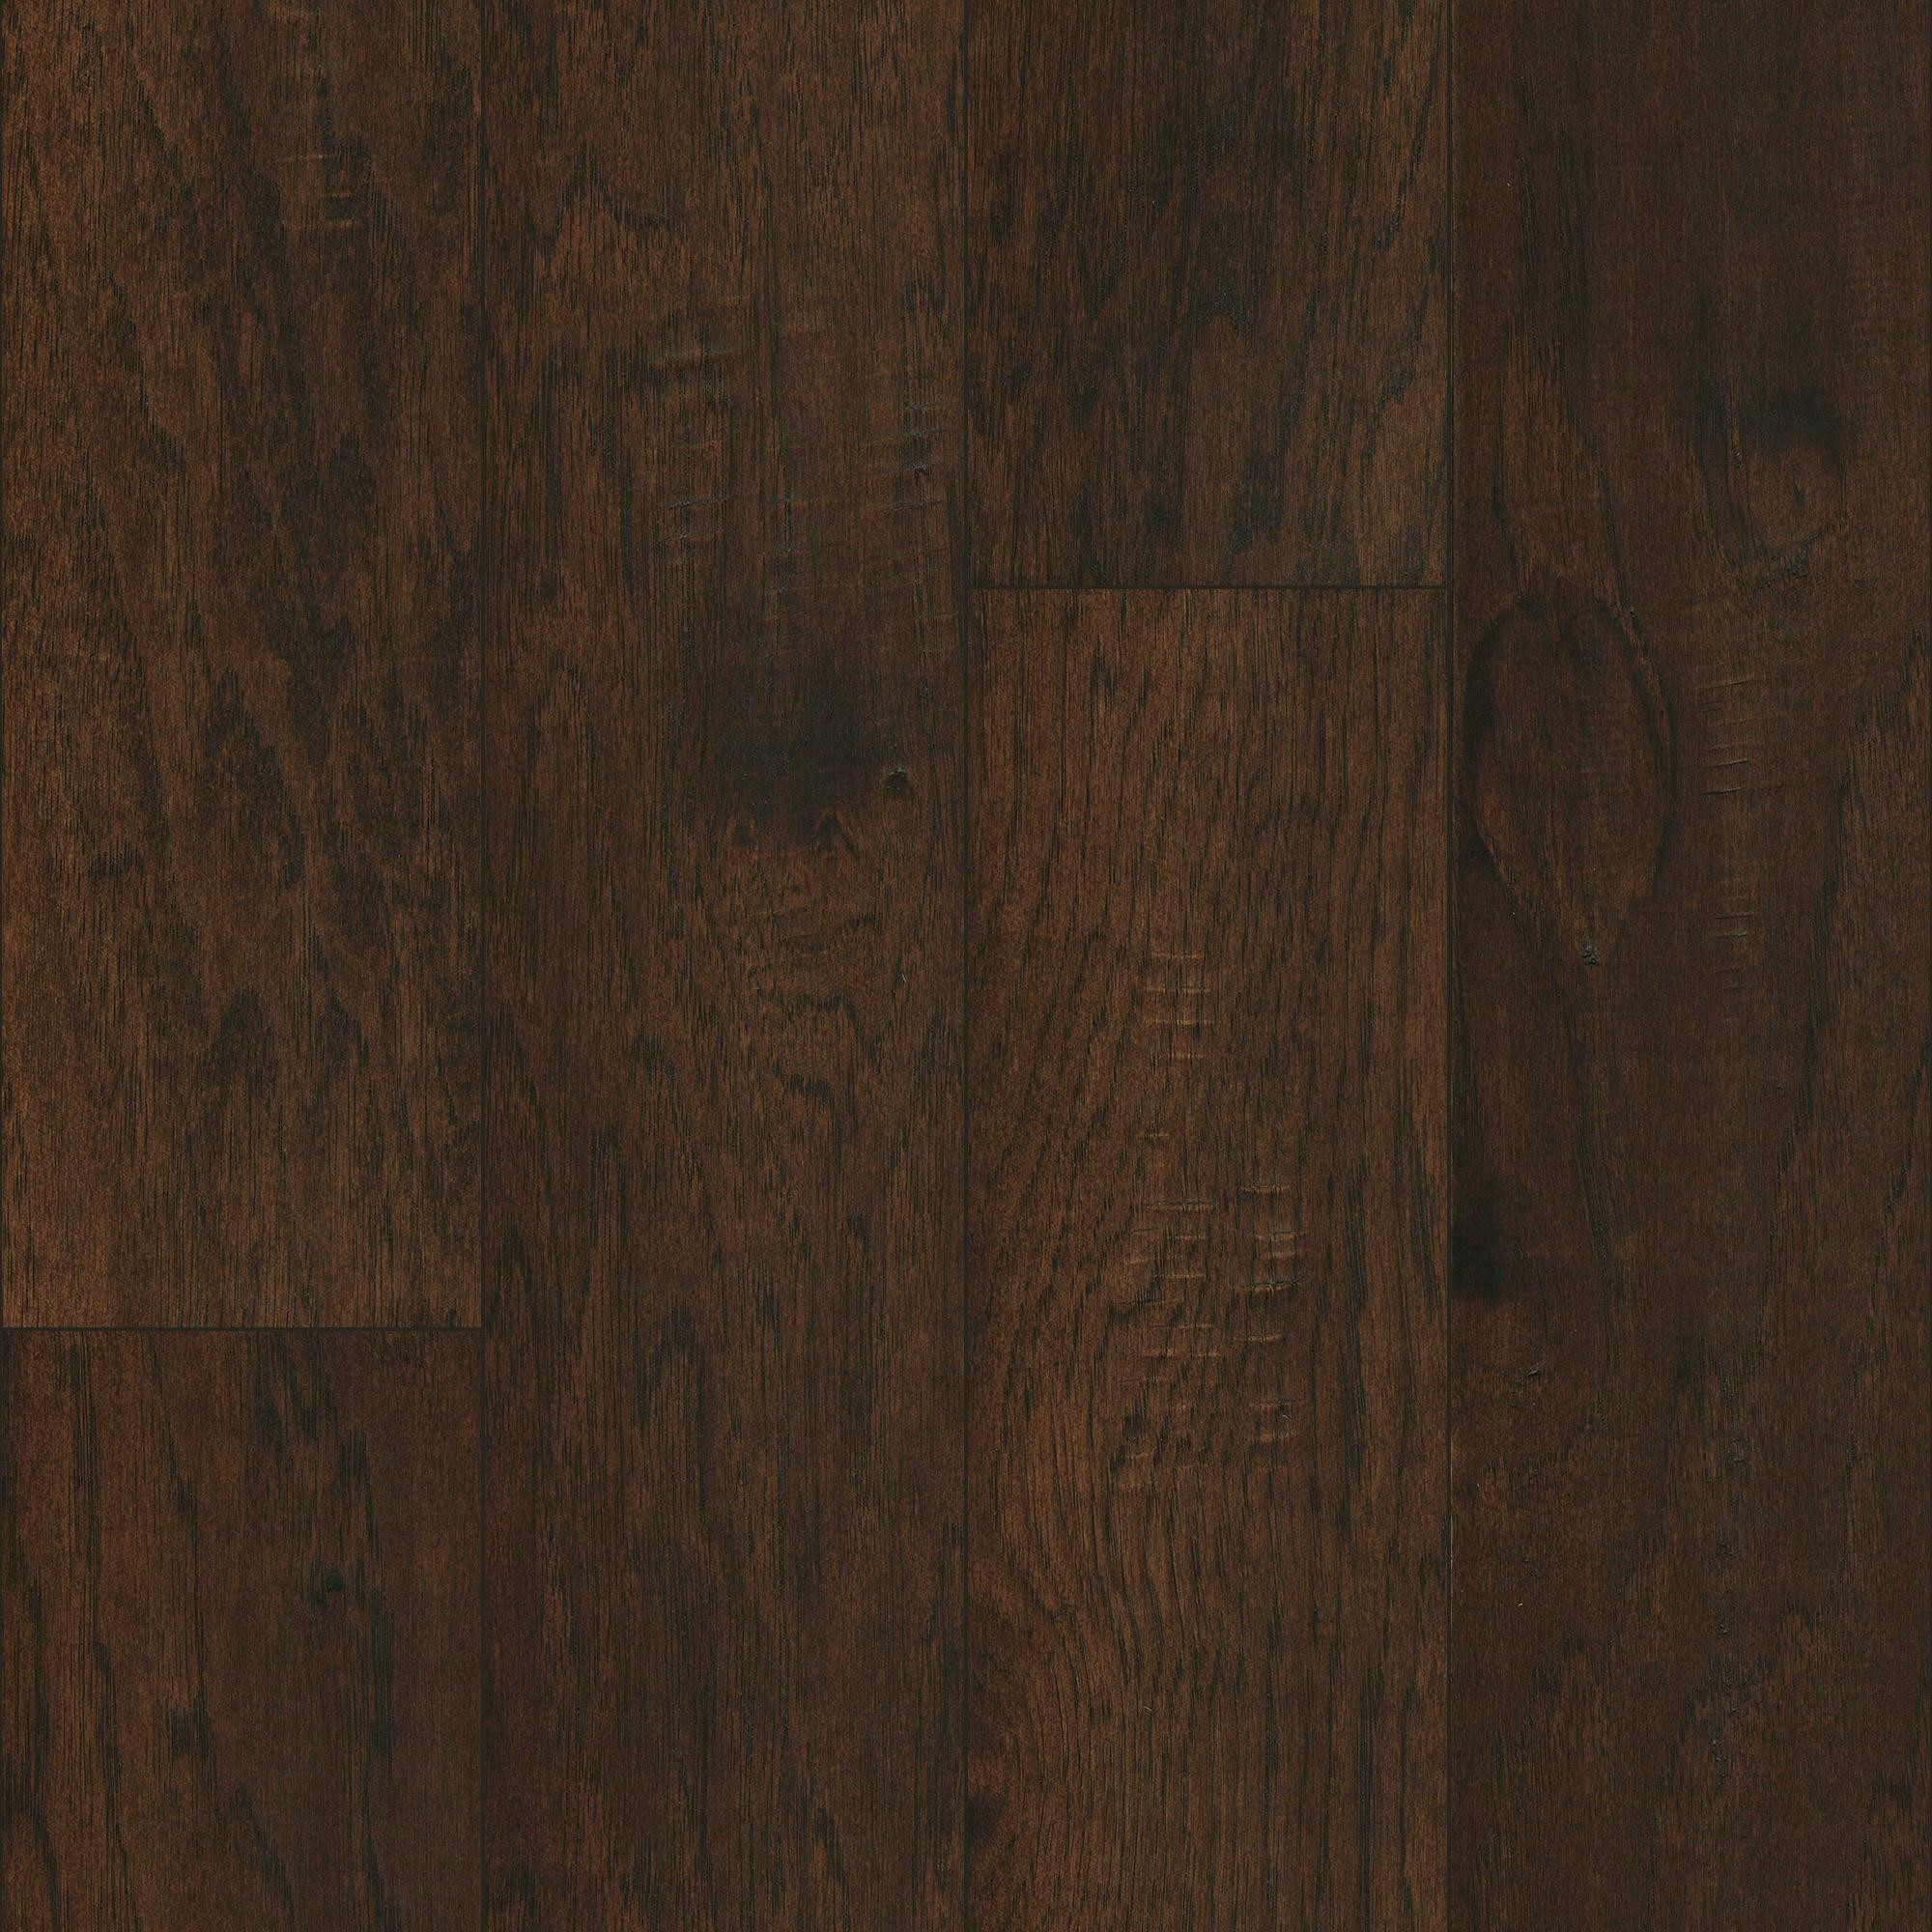 29 Unique Hardwood Floor Refinishing Denver Reviews Unique